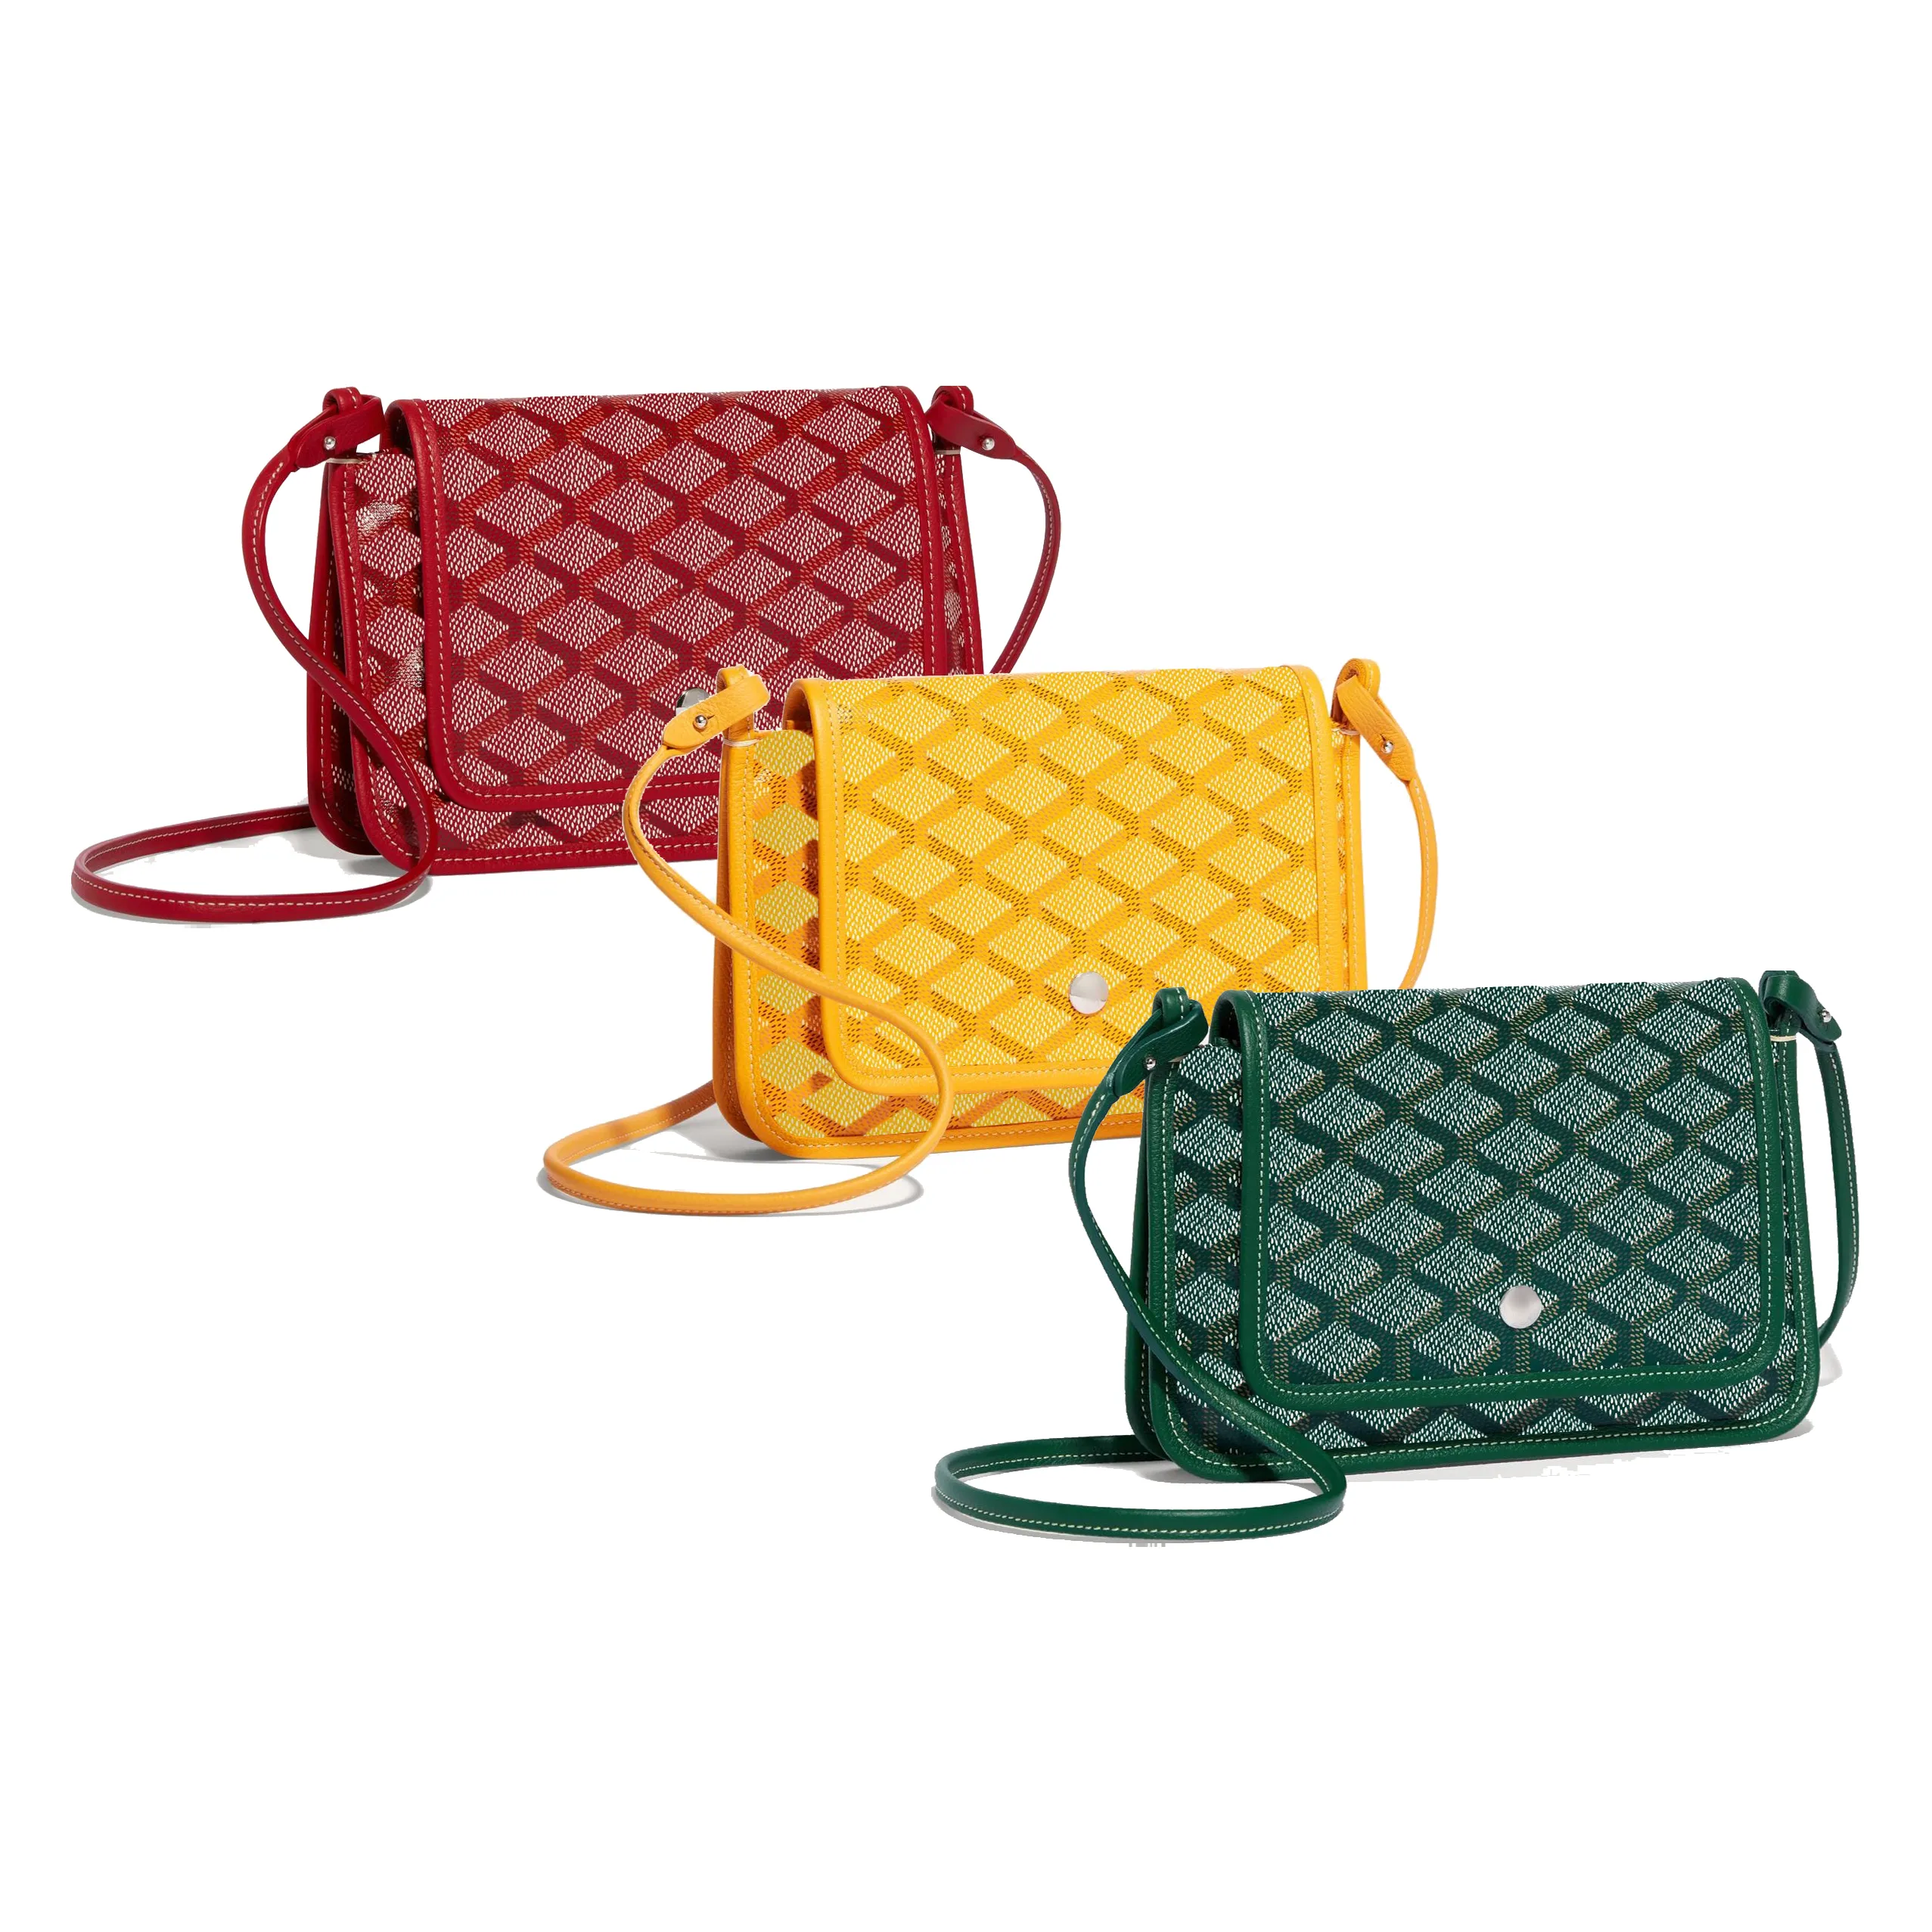 10a quality Luxury Designer WOC envelope bags women's mens wallet mini tote clutch bags real Leather handbag purse fashion crossBody messenger Shoulder Bag wallet